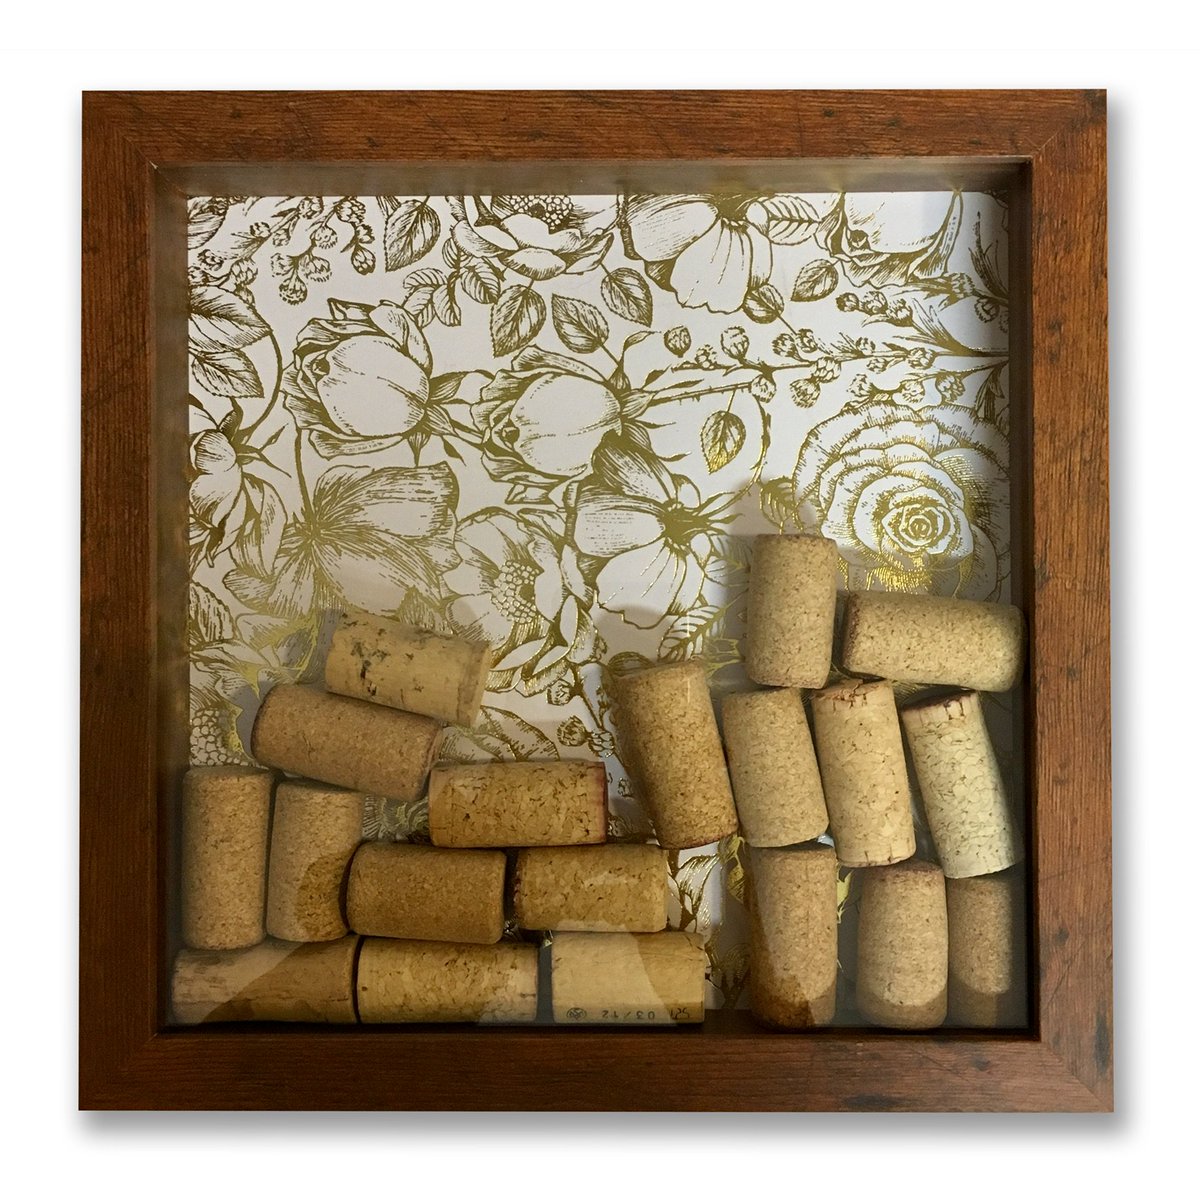 Gold Foil Patterned Wine Cork Shadow Box: amazon.com/Gold-Floral-Wi…
#giftforher #winelovers #giftforwinelover #giftformom #winegift #momgift